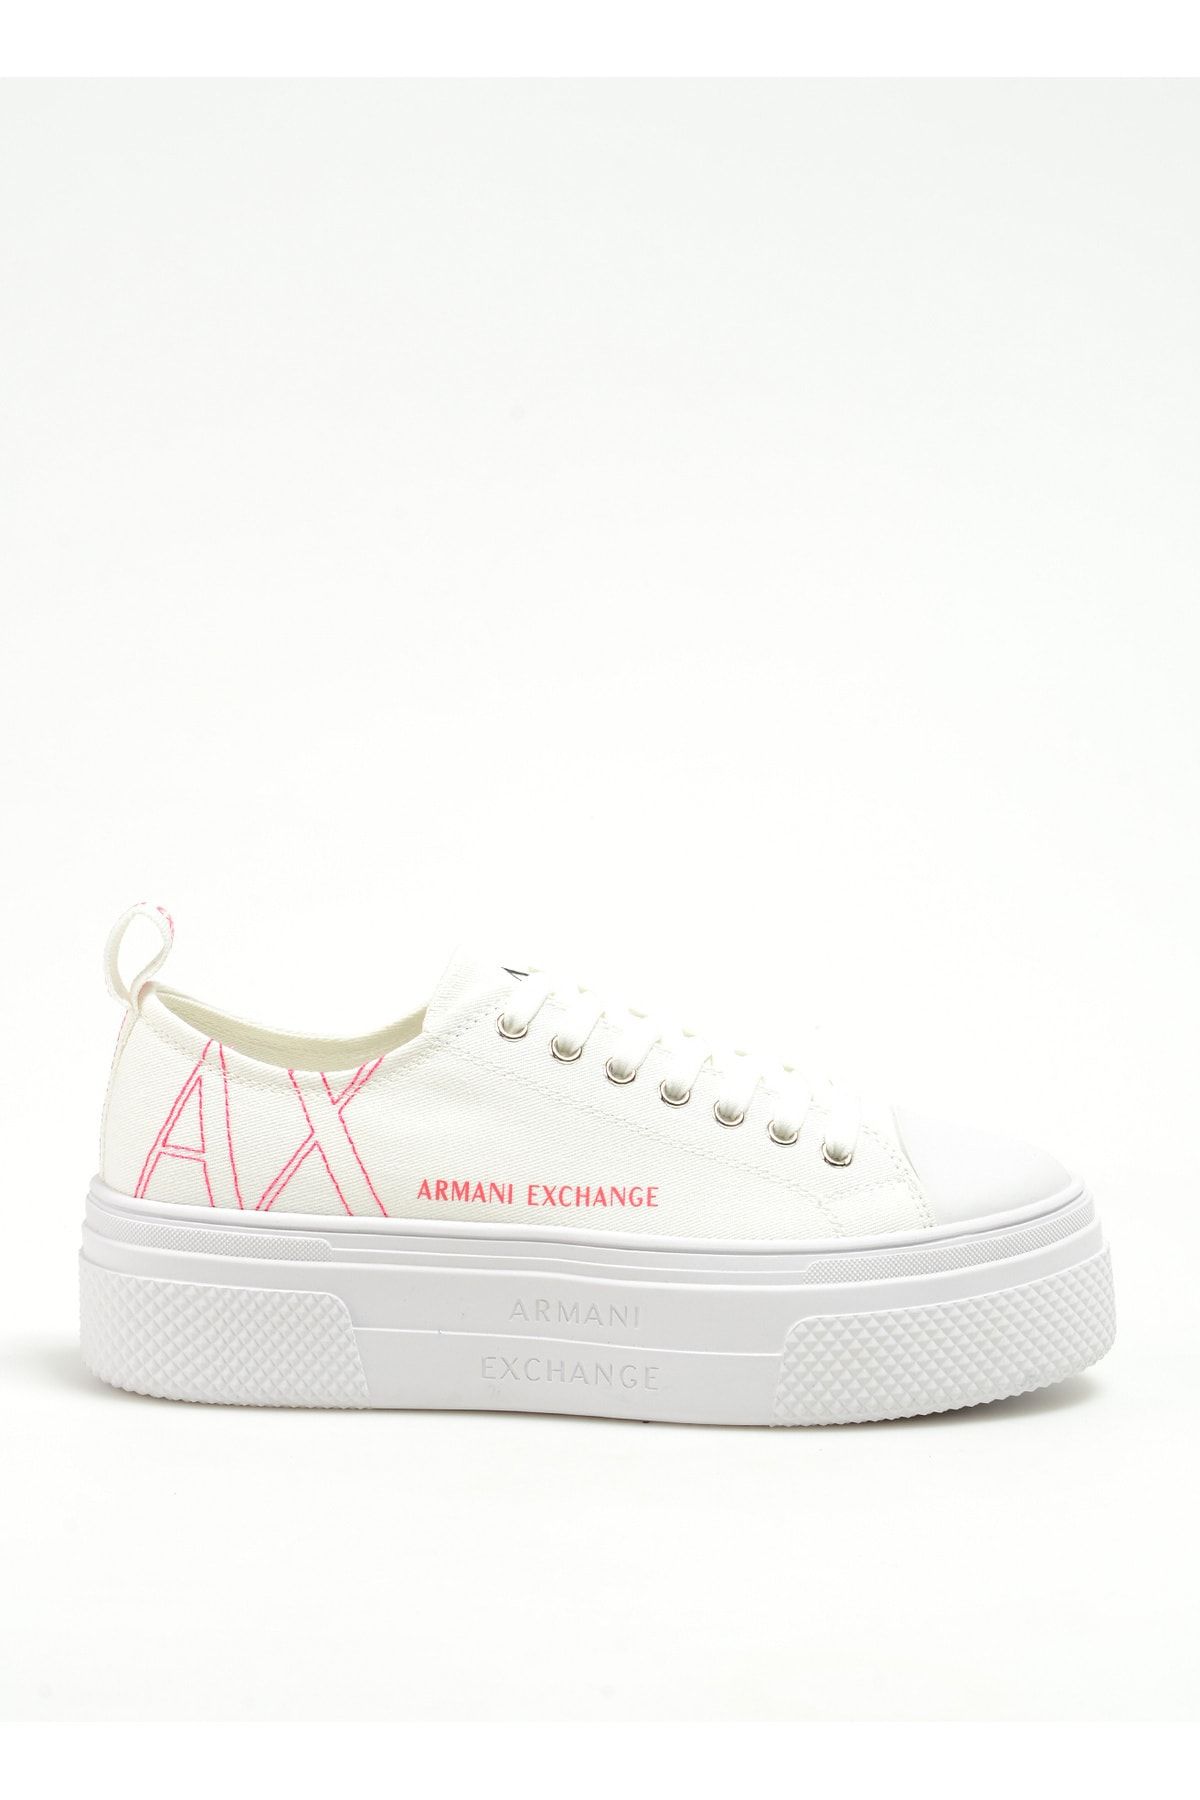 Armani Exchange Beyaz Kadın Sneaker XDX115XV695S606